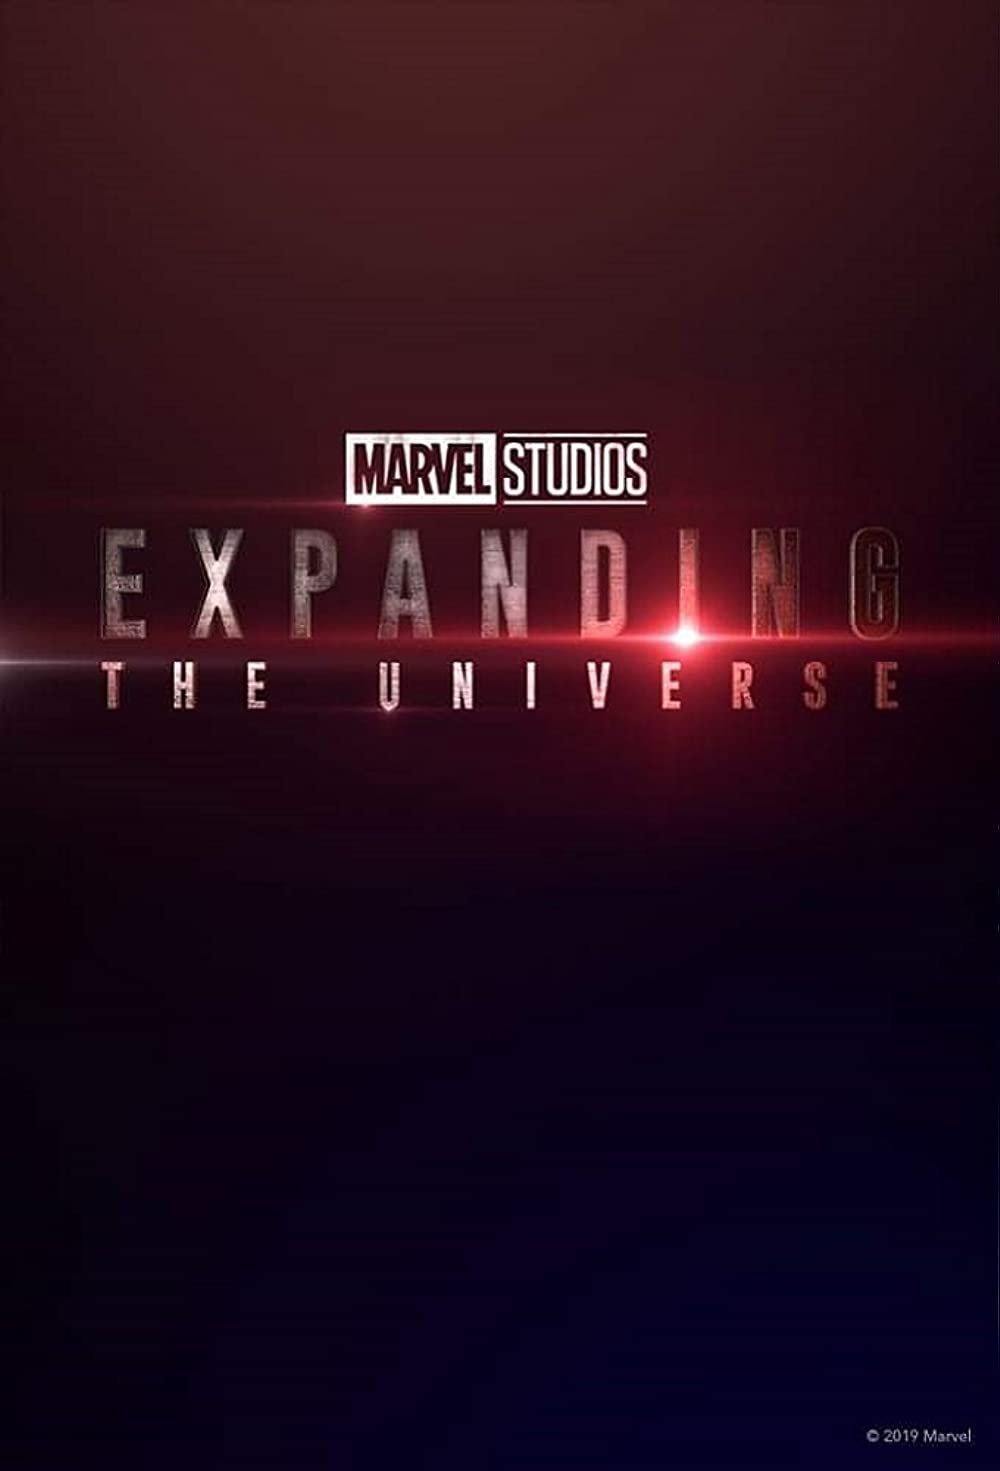 Filmbeschreibung zu Marvel Studios: Expanding the Universe